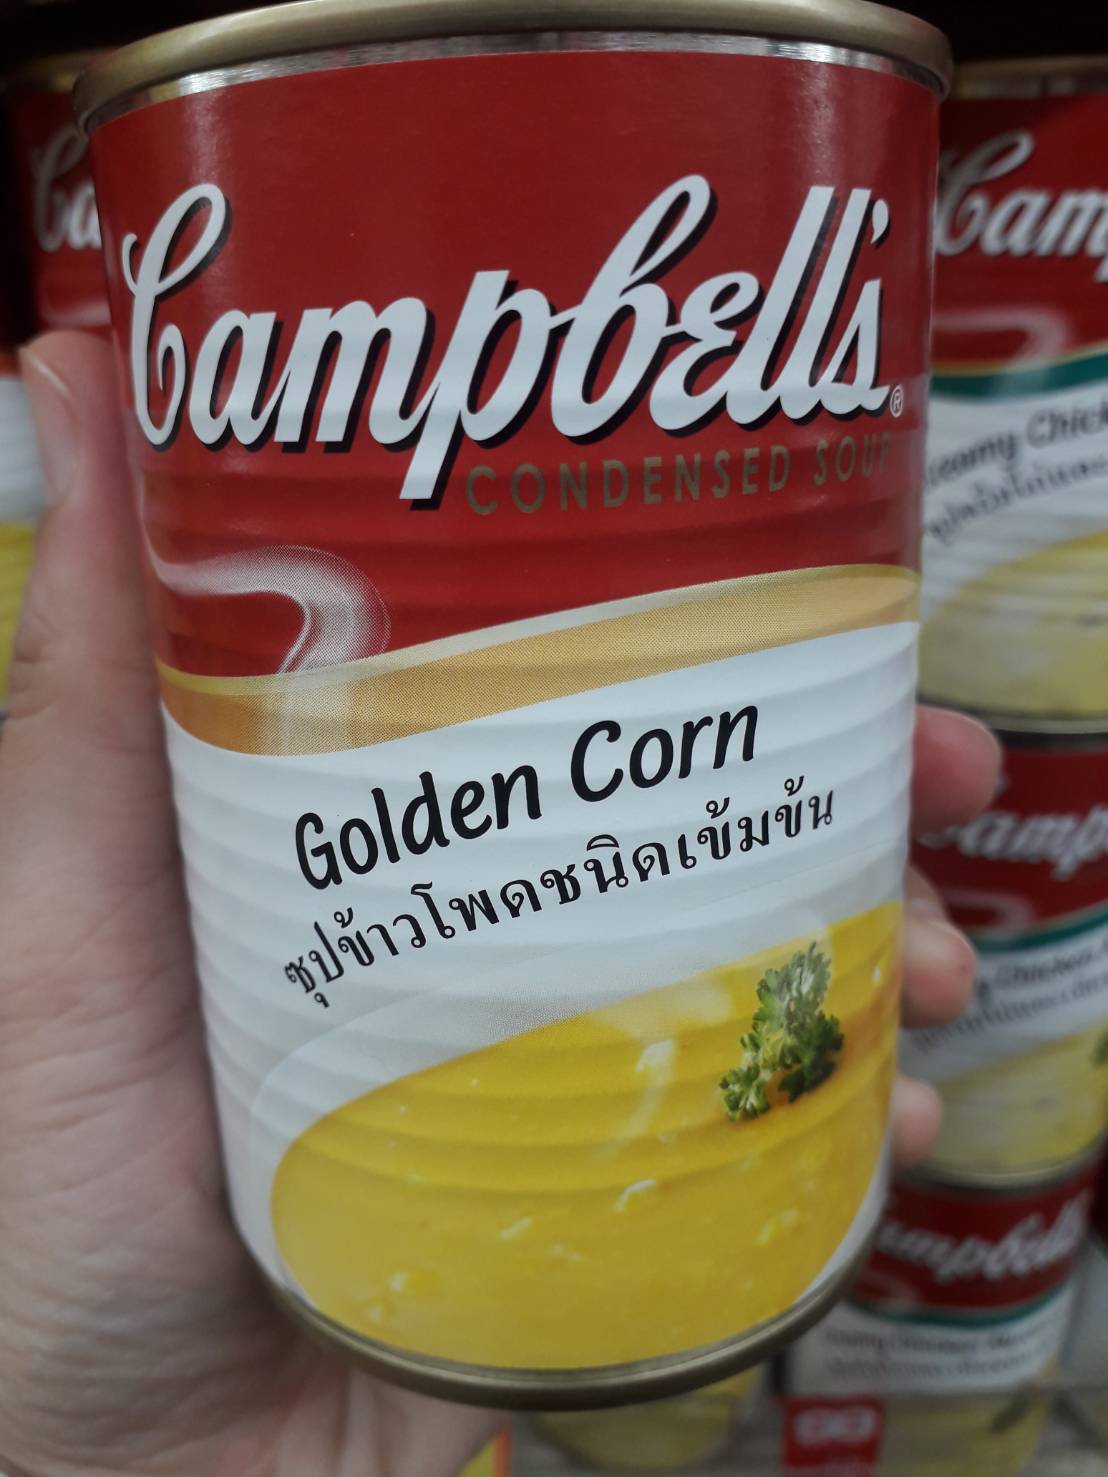 campbell's condensed soup golden corn แคมเบลล์ ซุปข้าวโพดชนิดเข้มข้น กึ่งสำเร็จรูป 310g